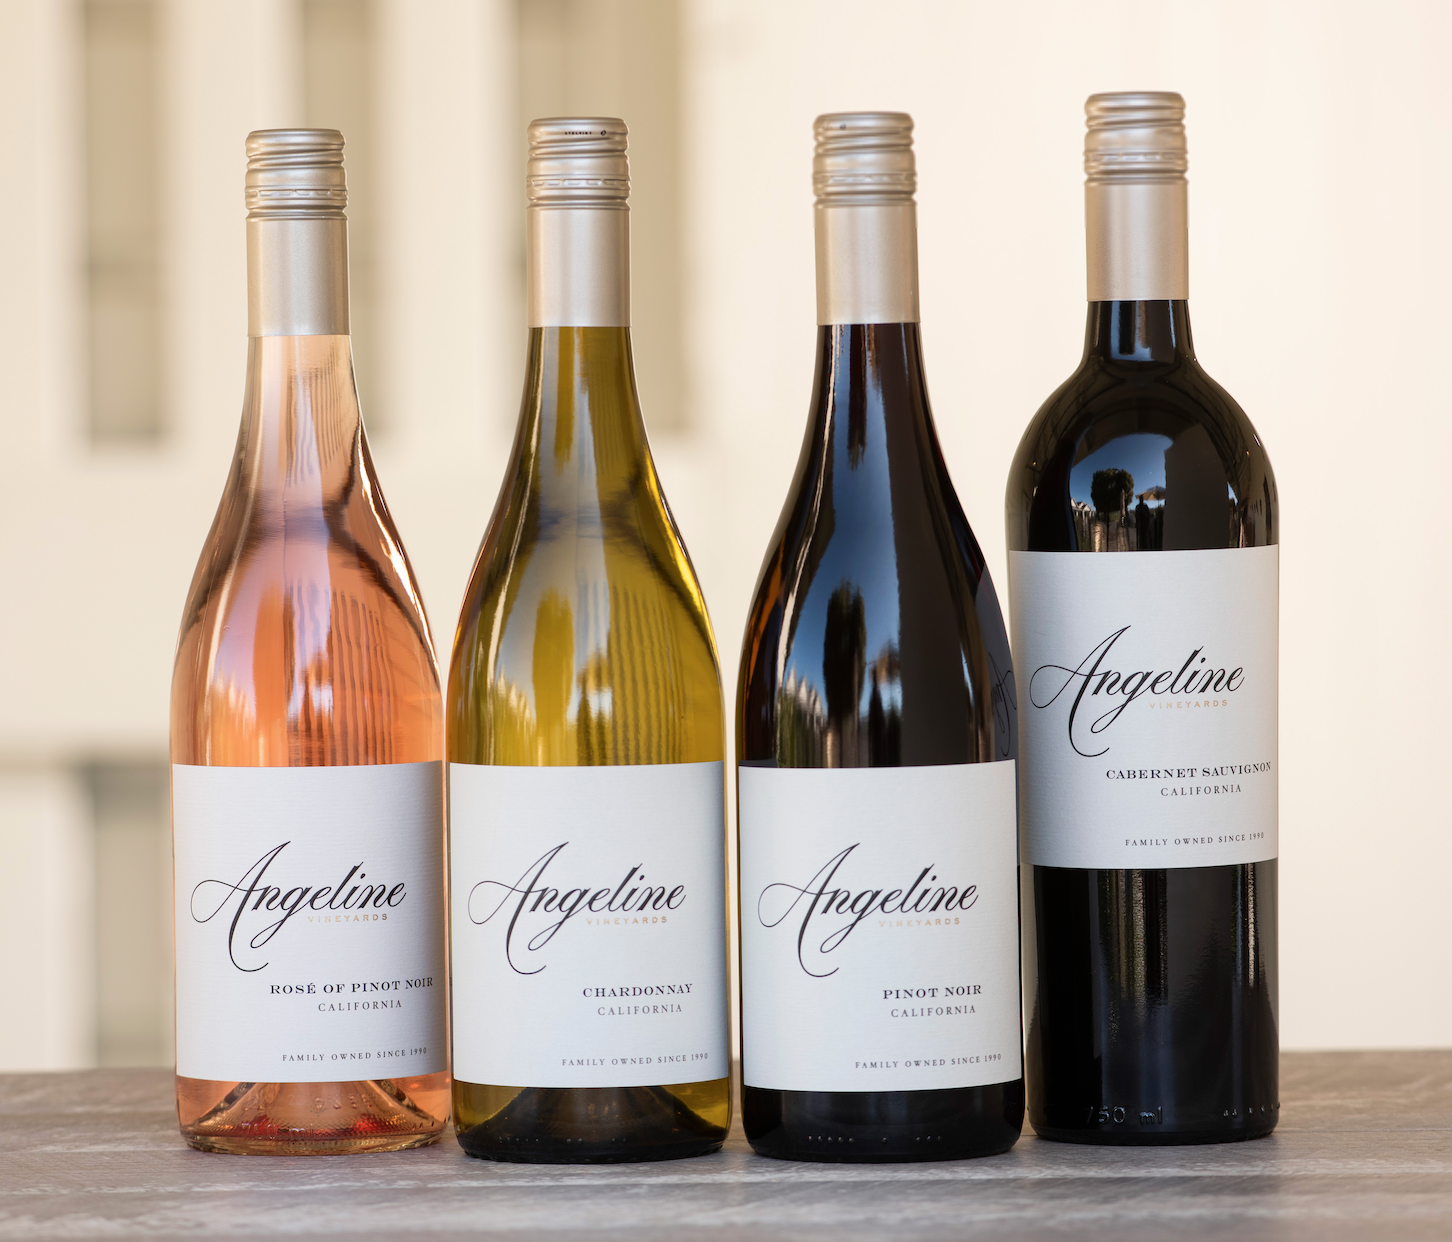 Angeline wines range california wines in europe with stock